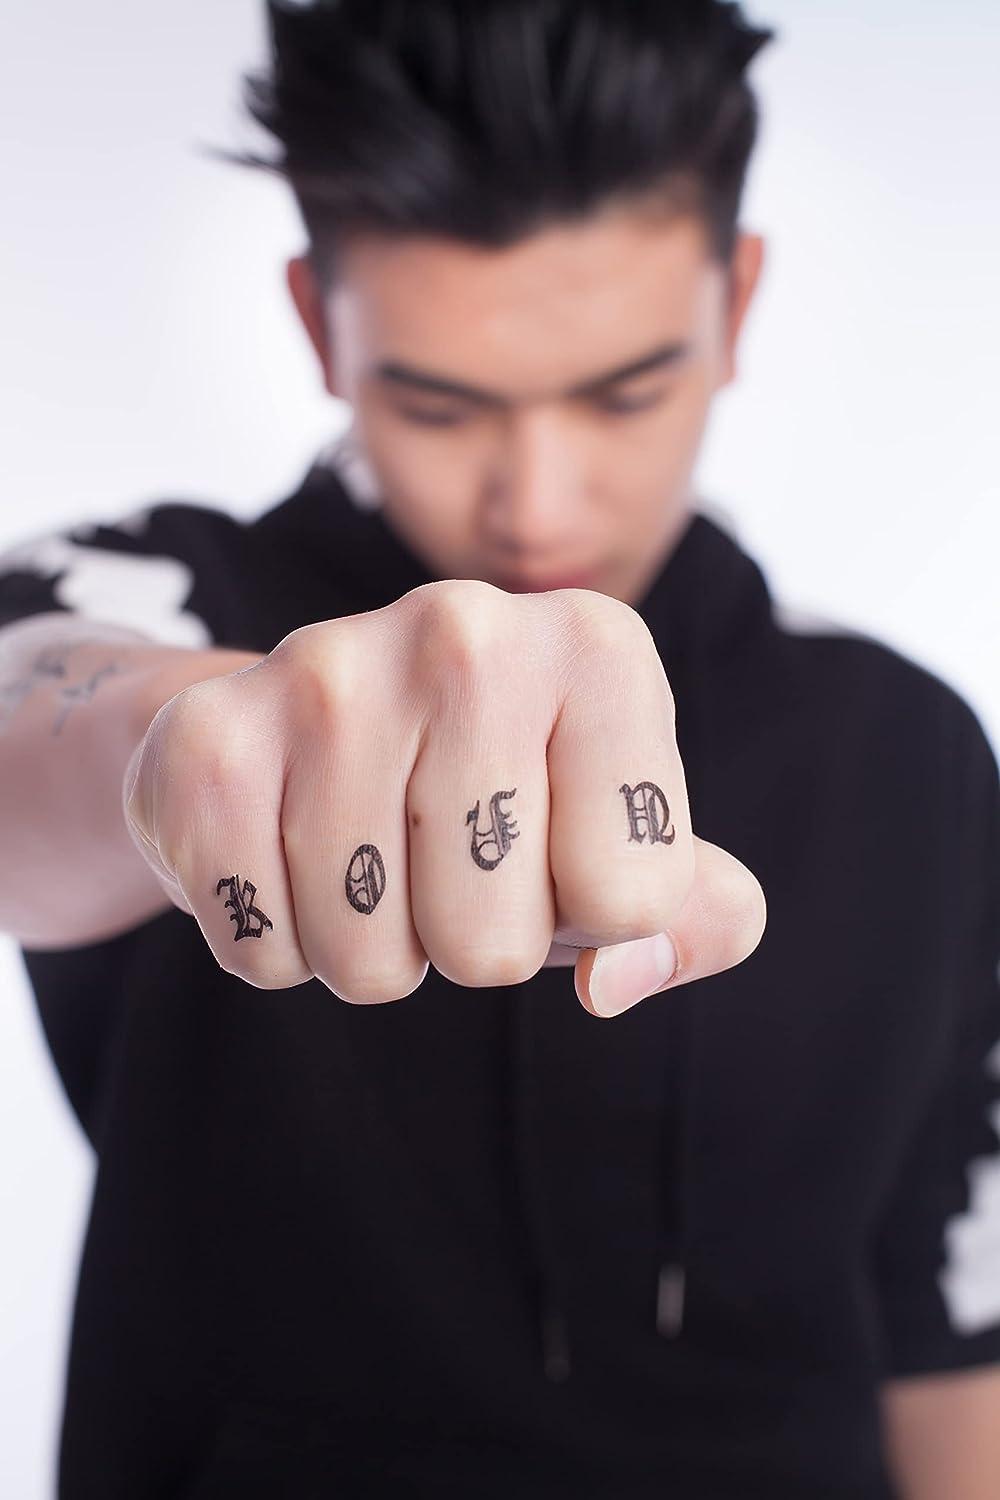 Finger tattoos for Jade Done at @bekindtattooing #fingertattoo  #birthdaytattoo #bekind #johannesburgtattooartist | Instagram